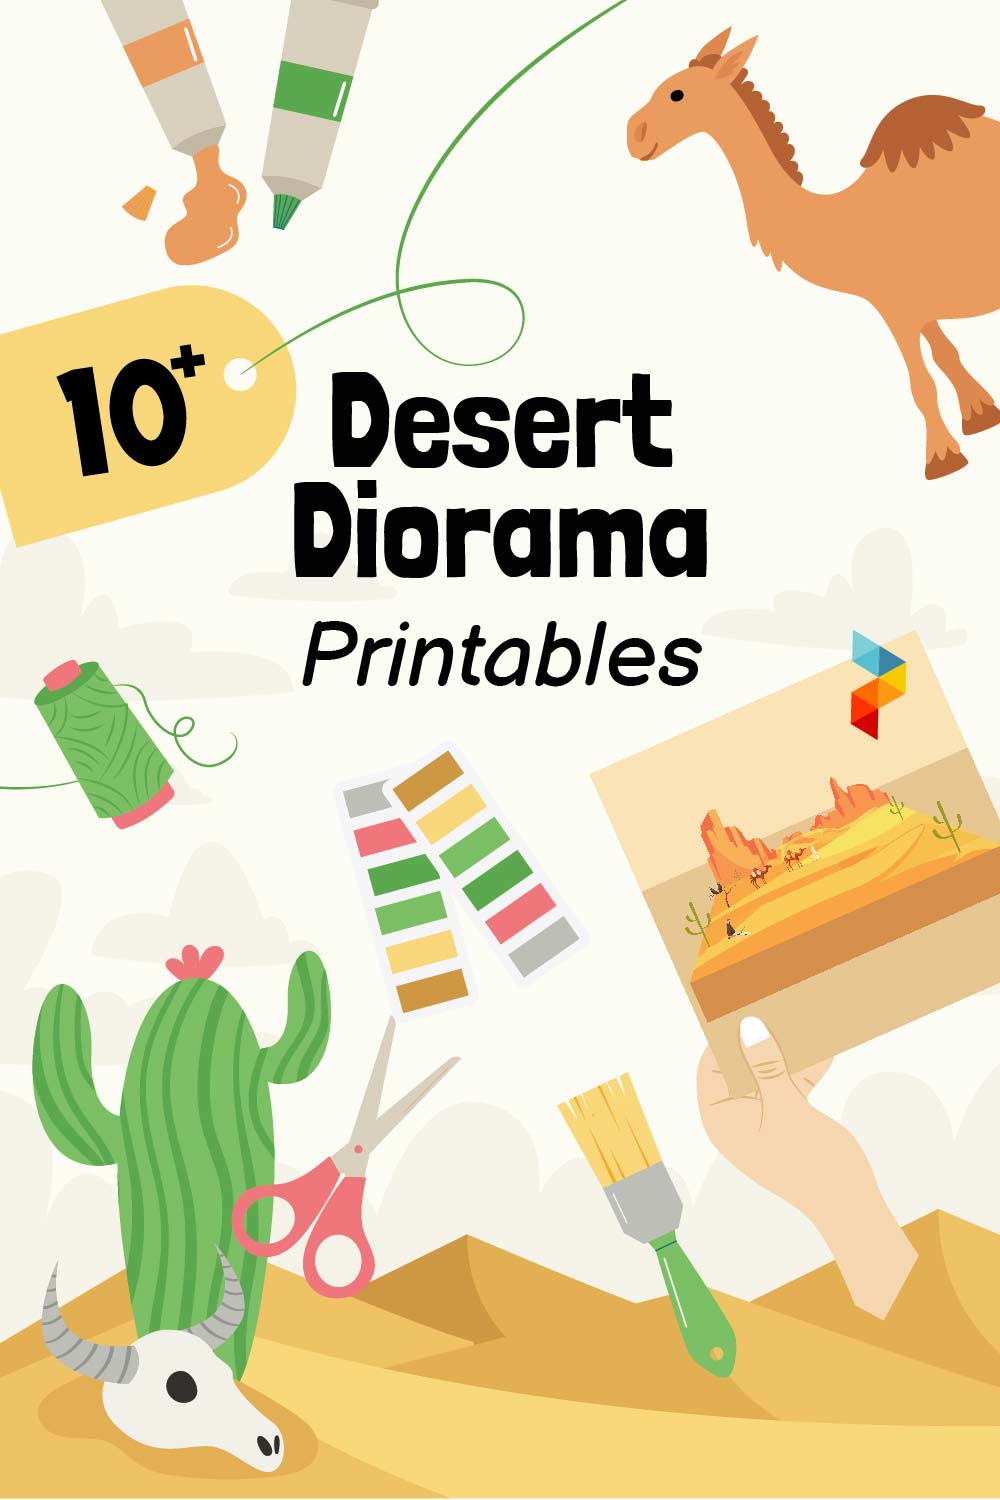 Desert Diorama